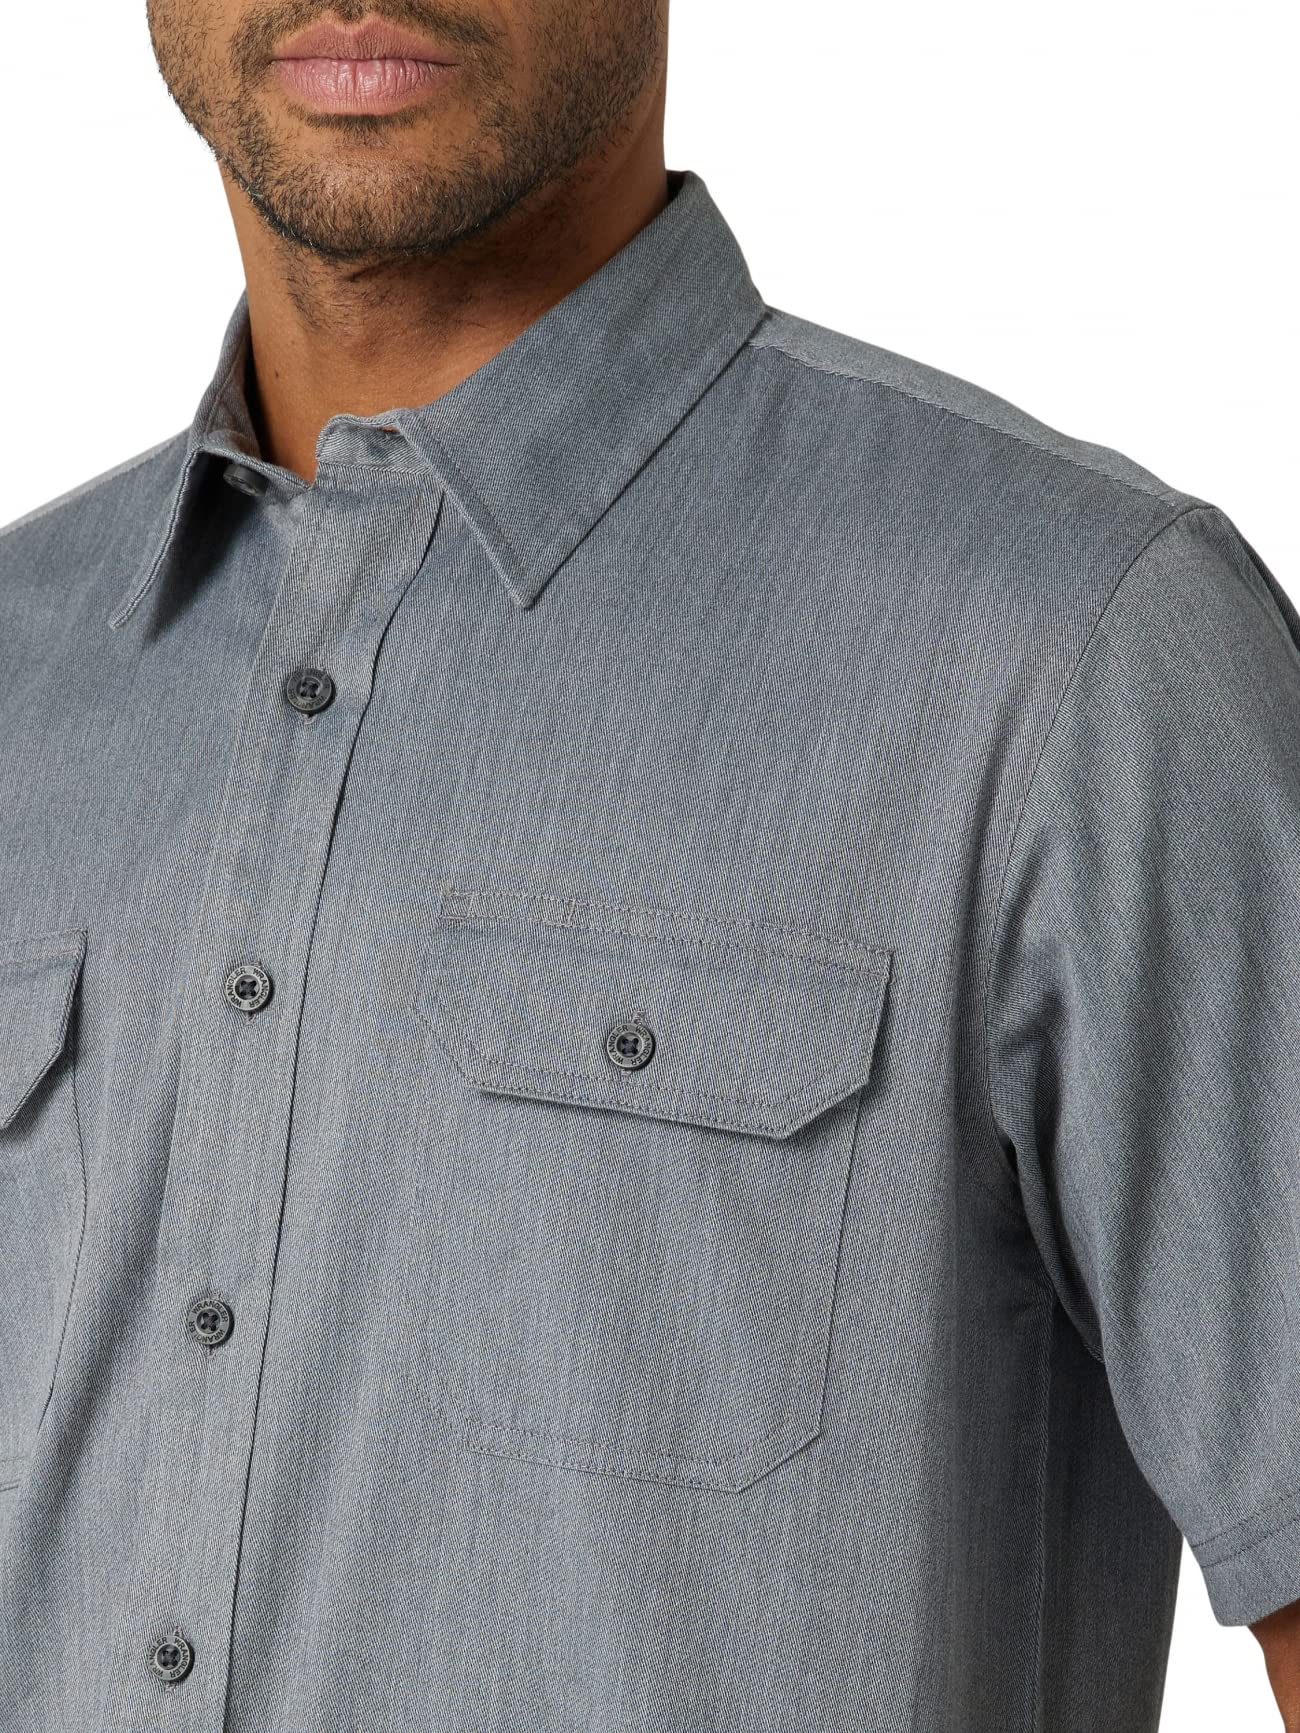 Wrangler Authentics Men's Short Sleeve Classic Woven Shirt, Asphalt Heather, Large